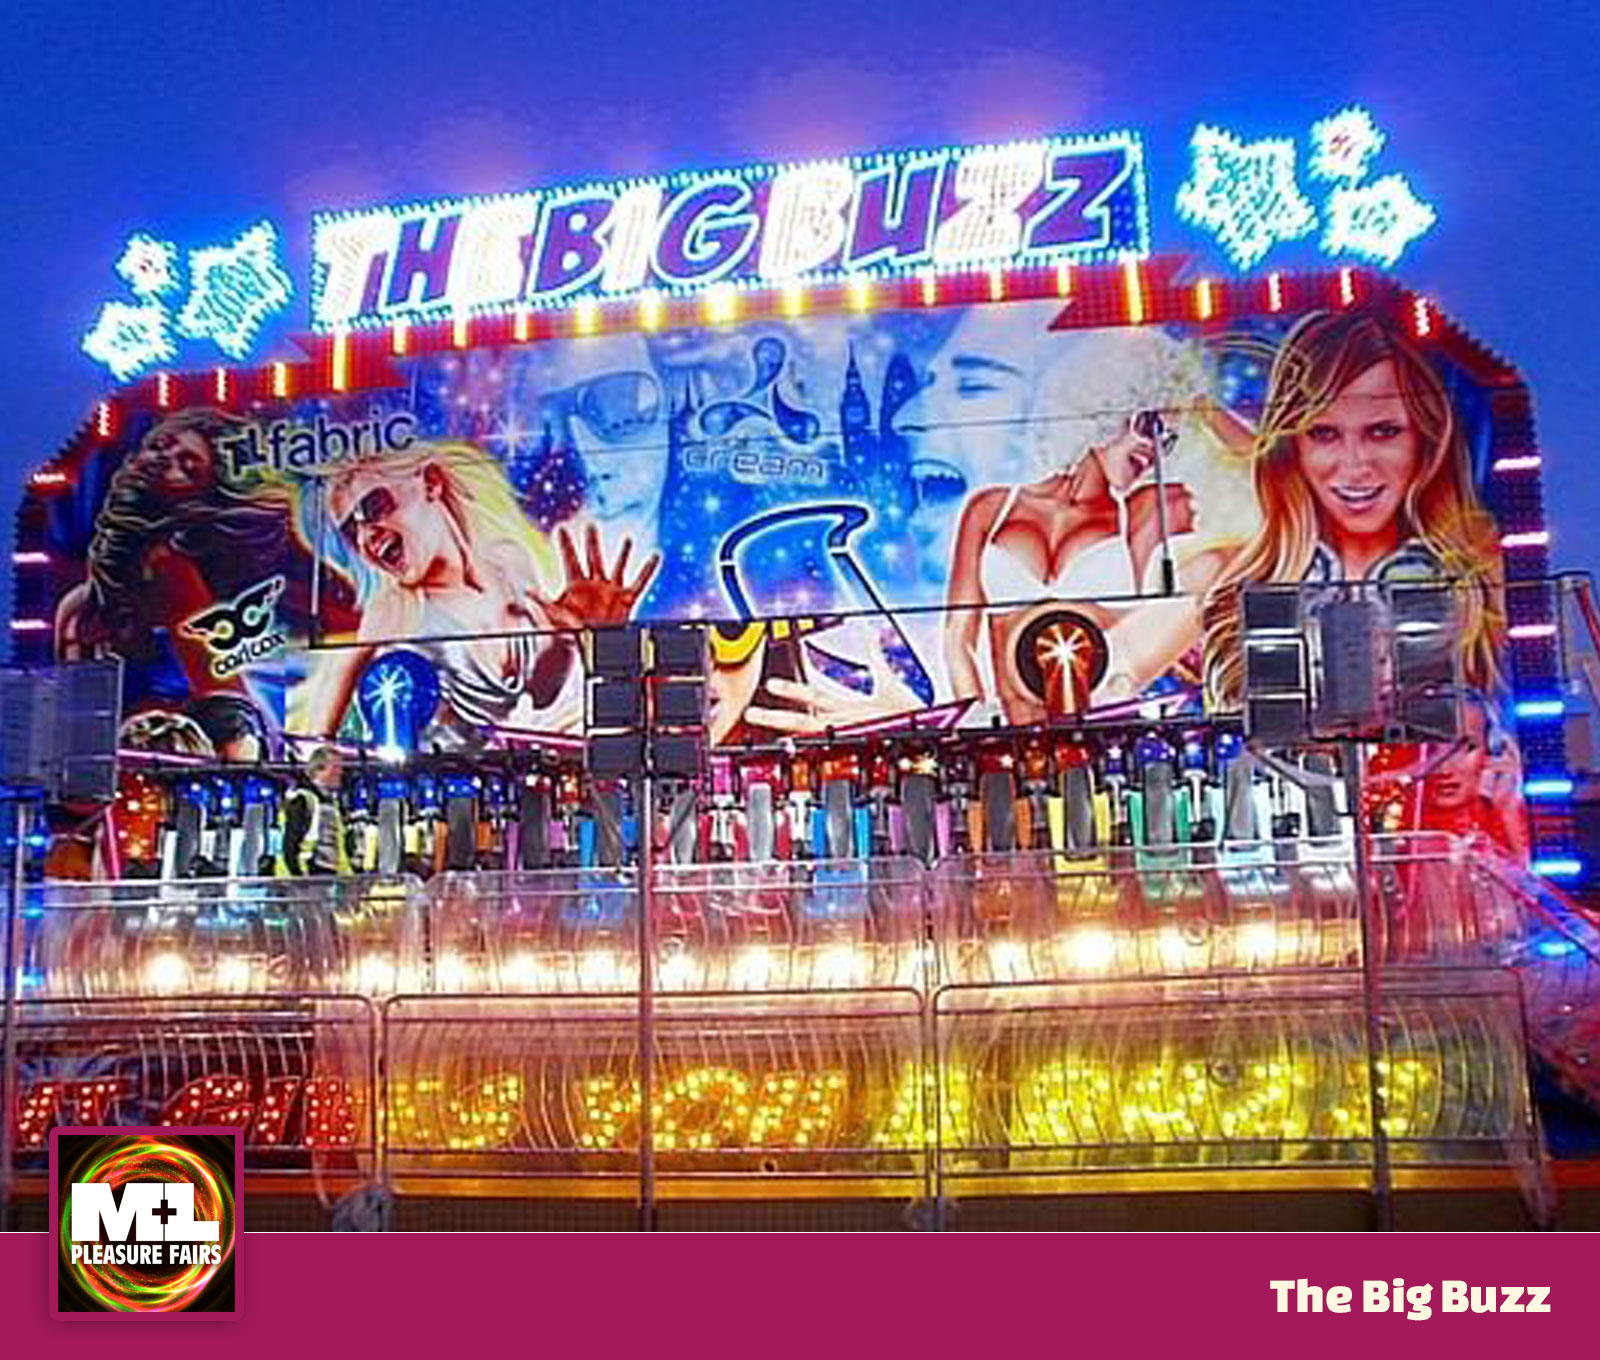 Funfair rides & attractions from M&L Benson’s Pleasure Fairs